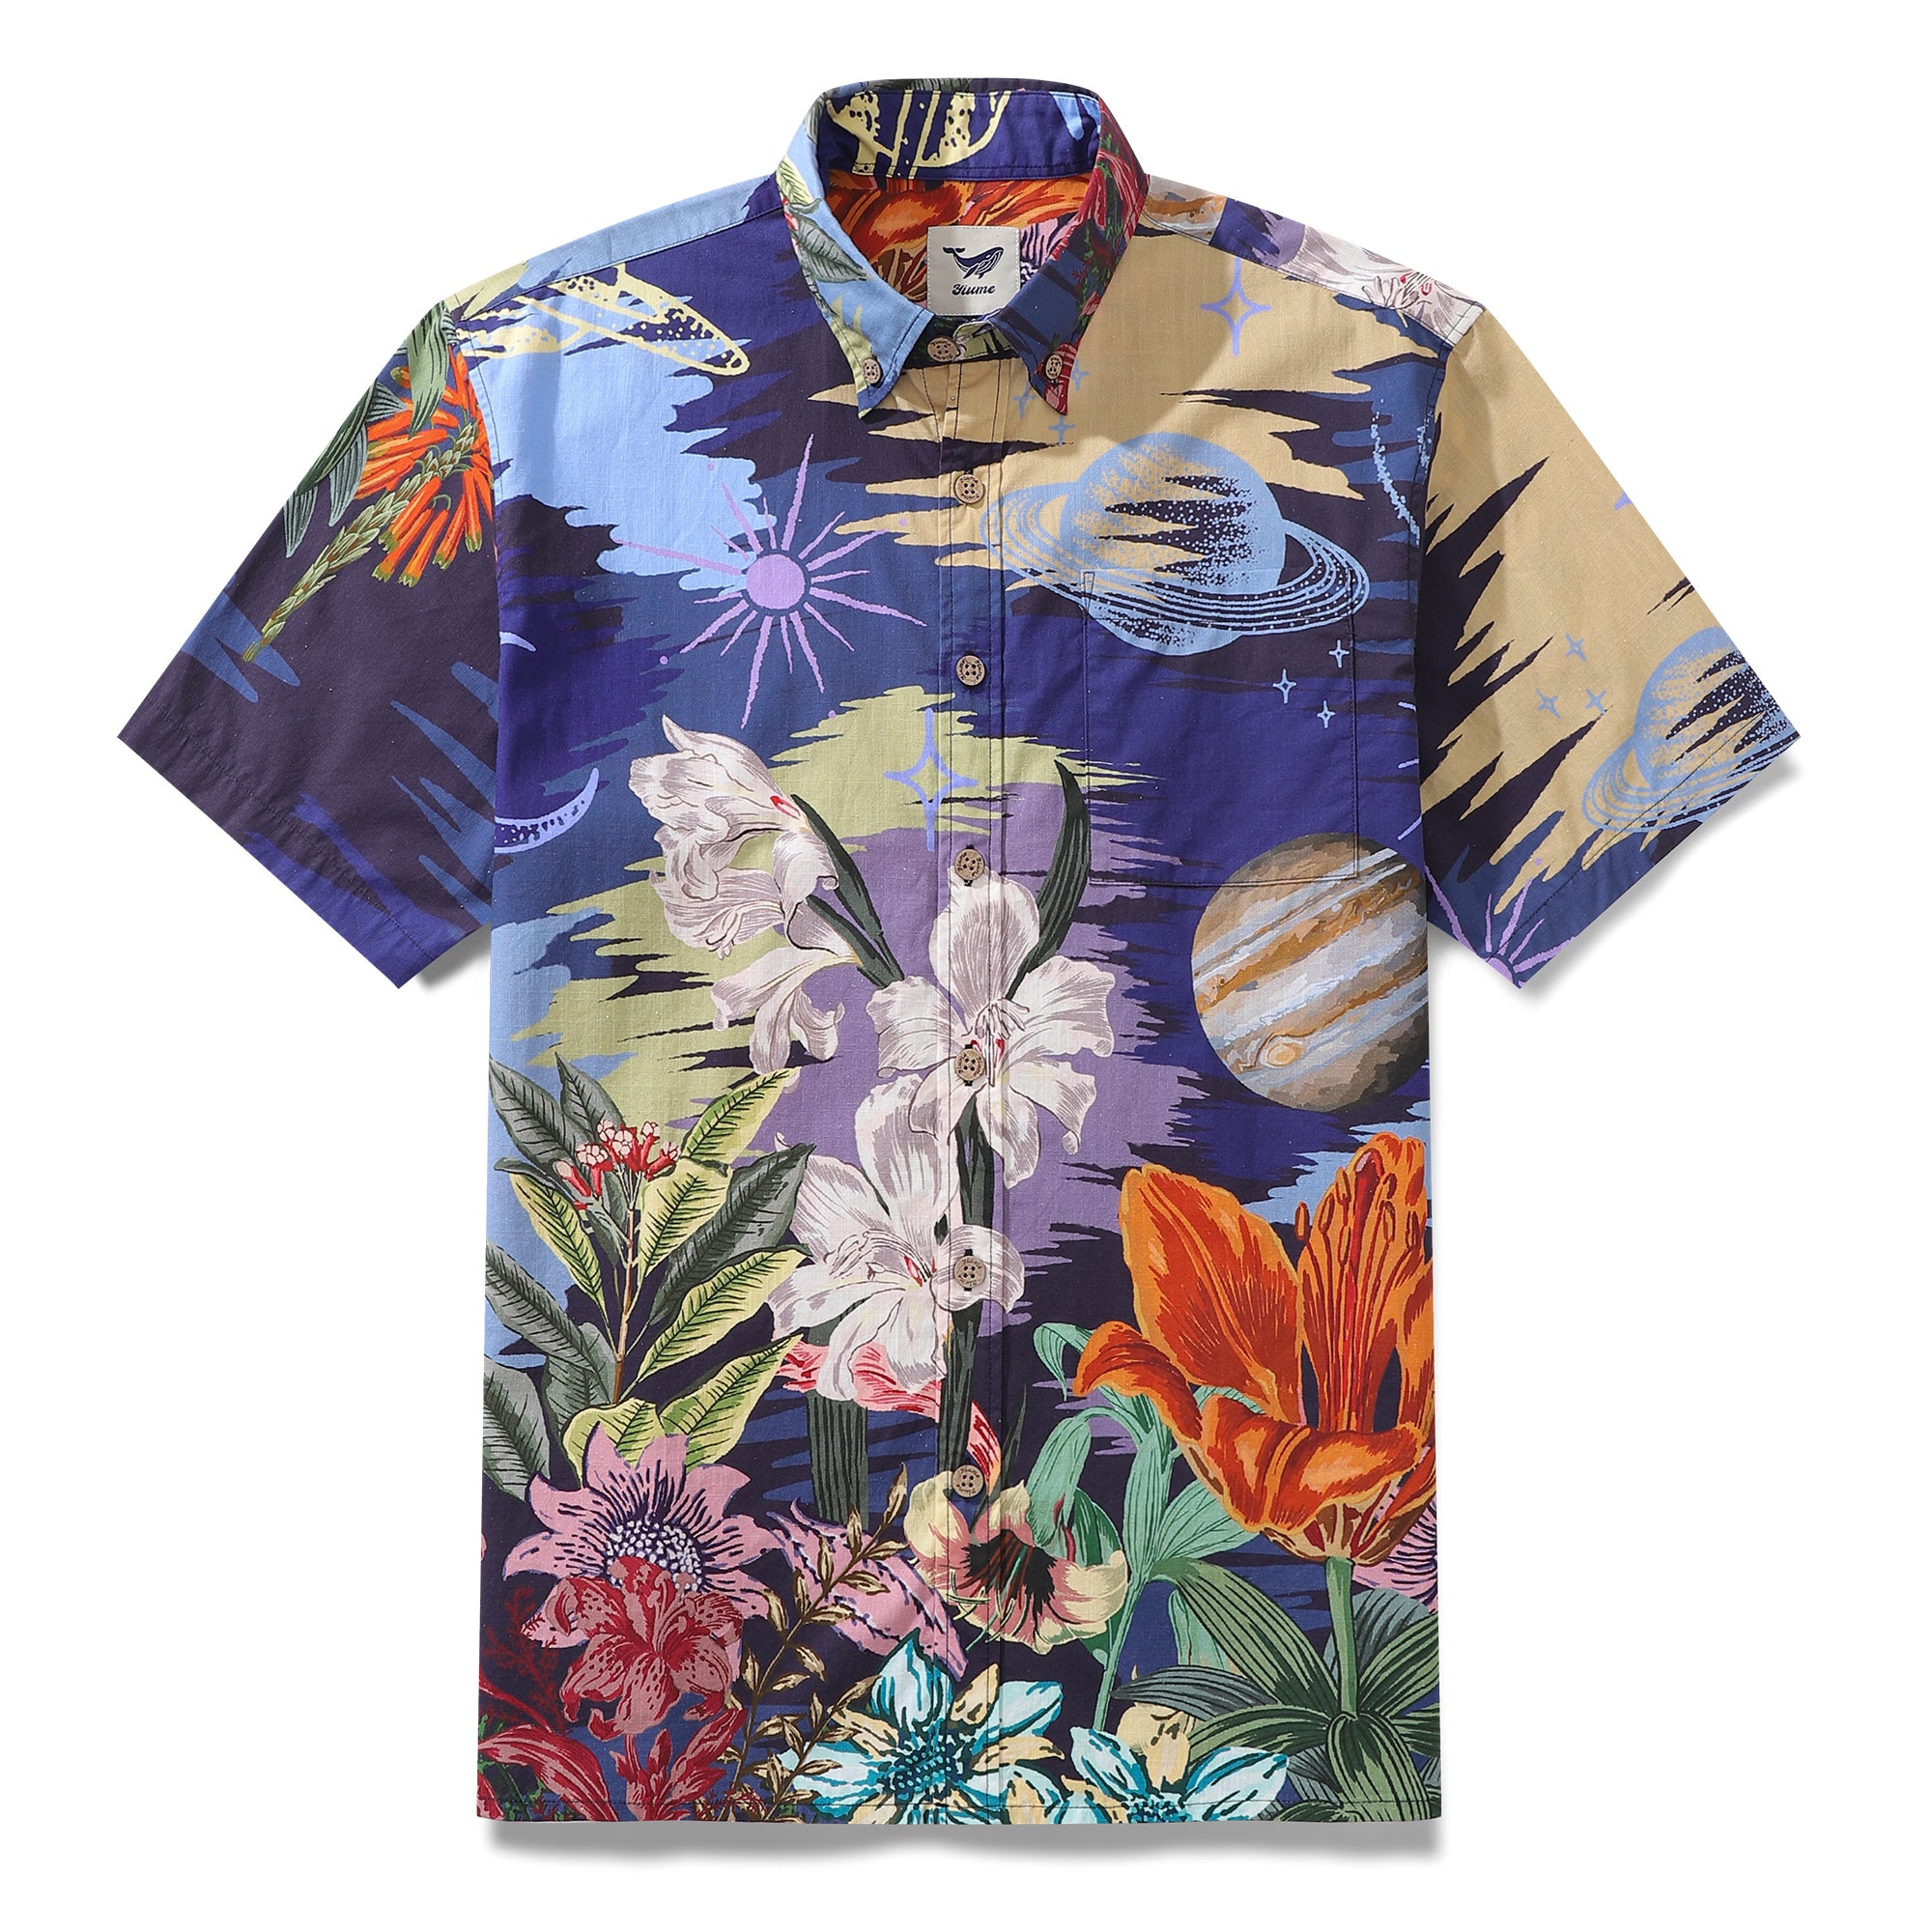 Men's Hawaiian Shirt 1950s Vintage Moonlight Sonata Print Short Sleeve Aloha Shirt